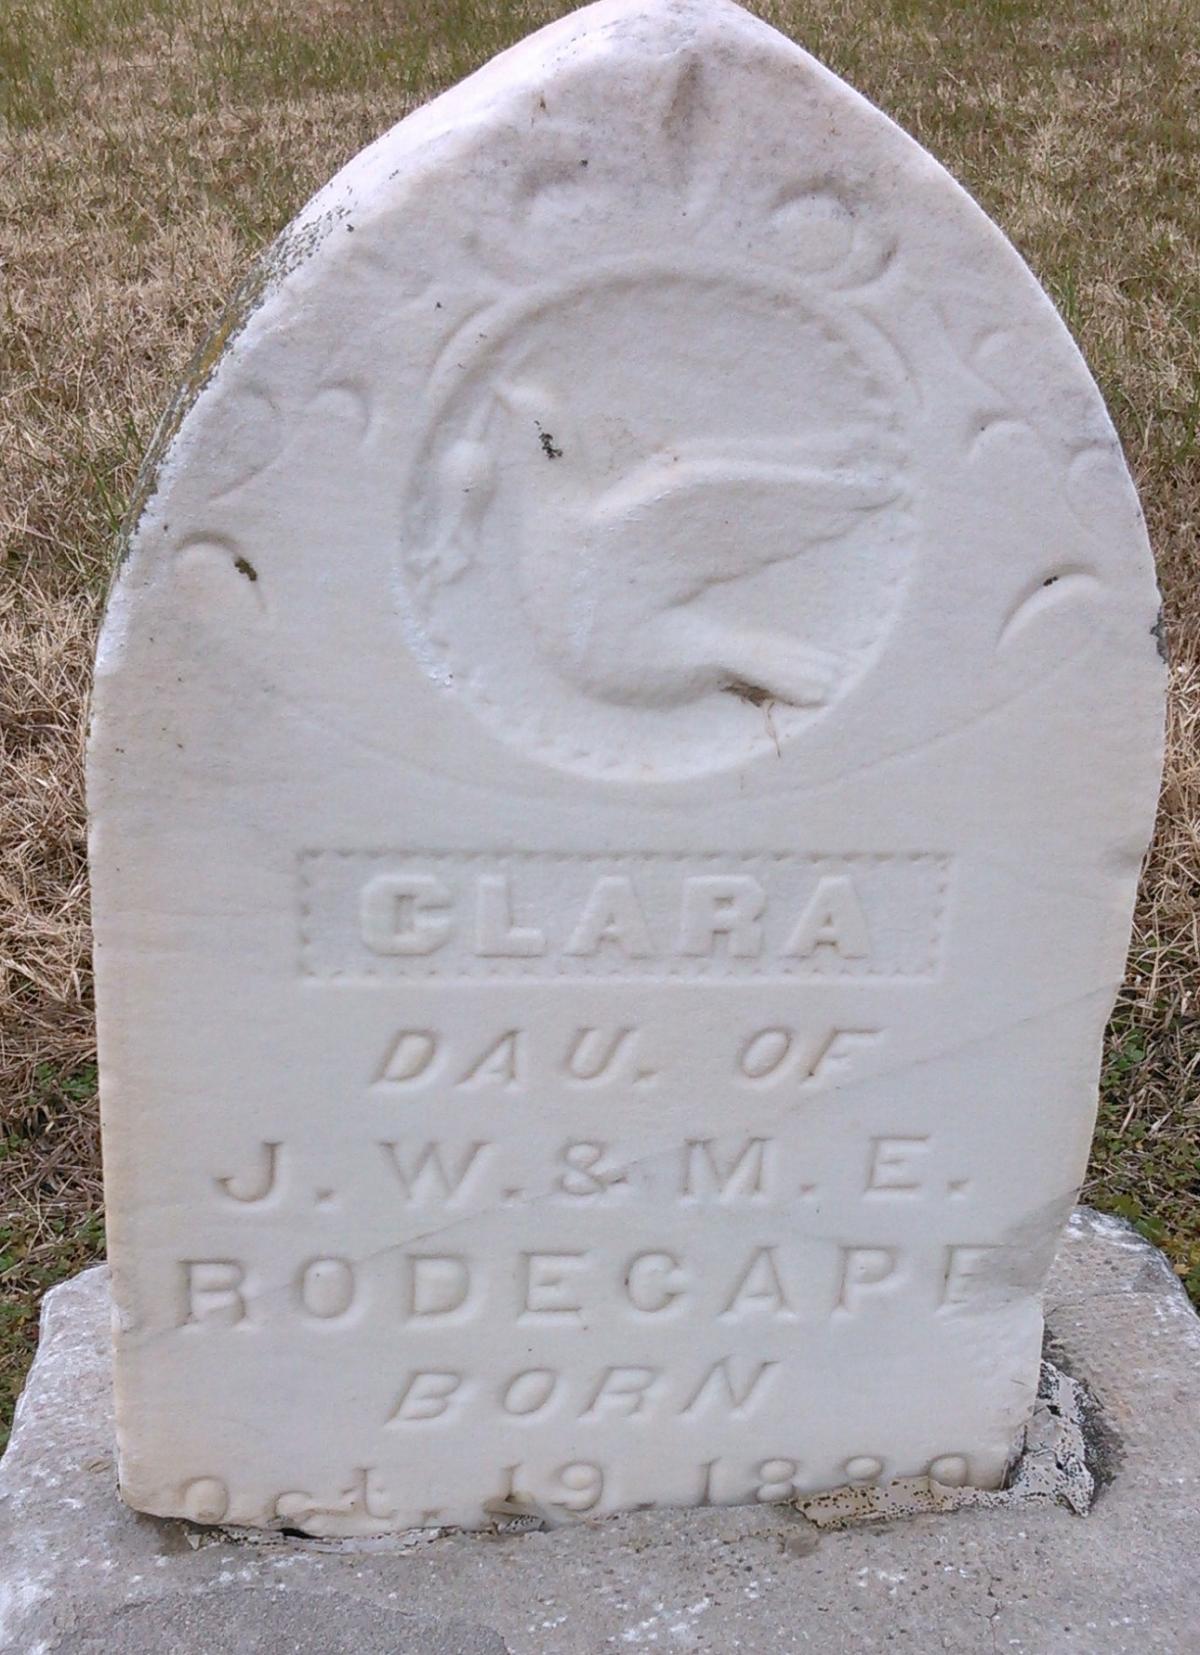 OK, Grove, Buzzard Cemetery, Rodecape, Clara Headstone